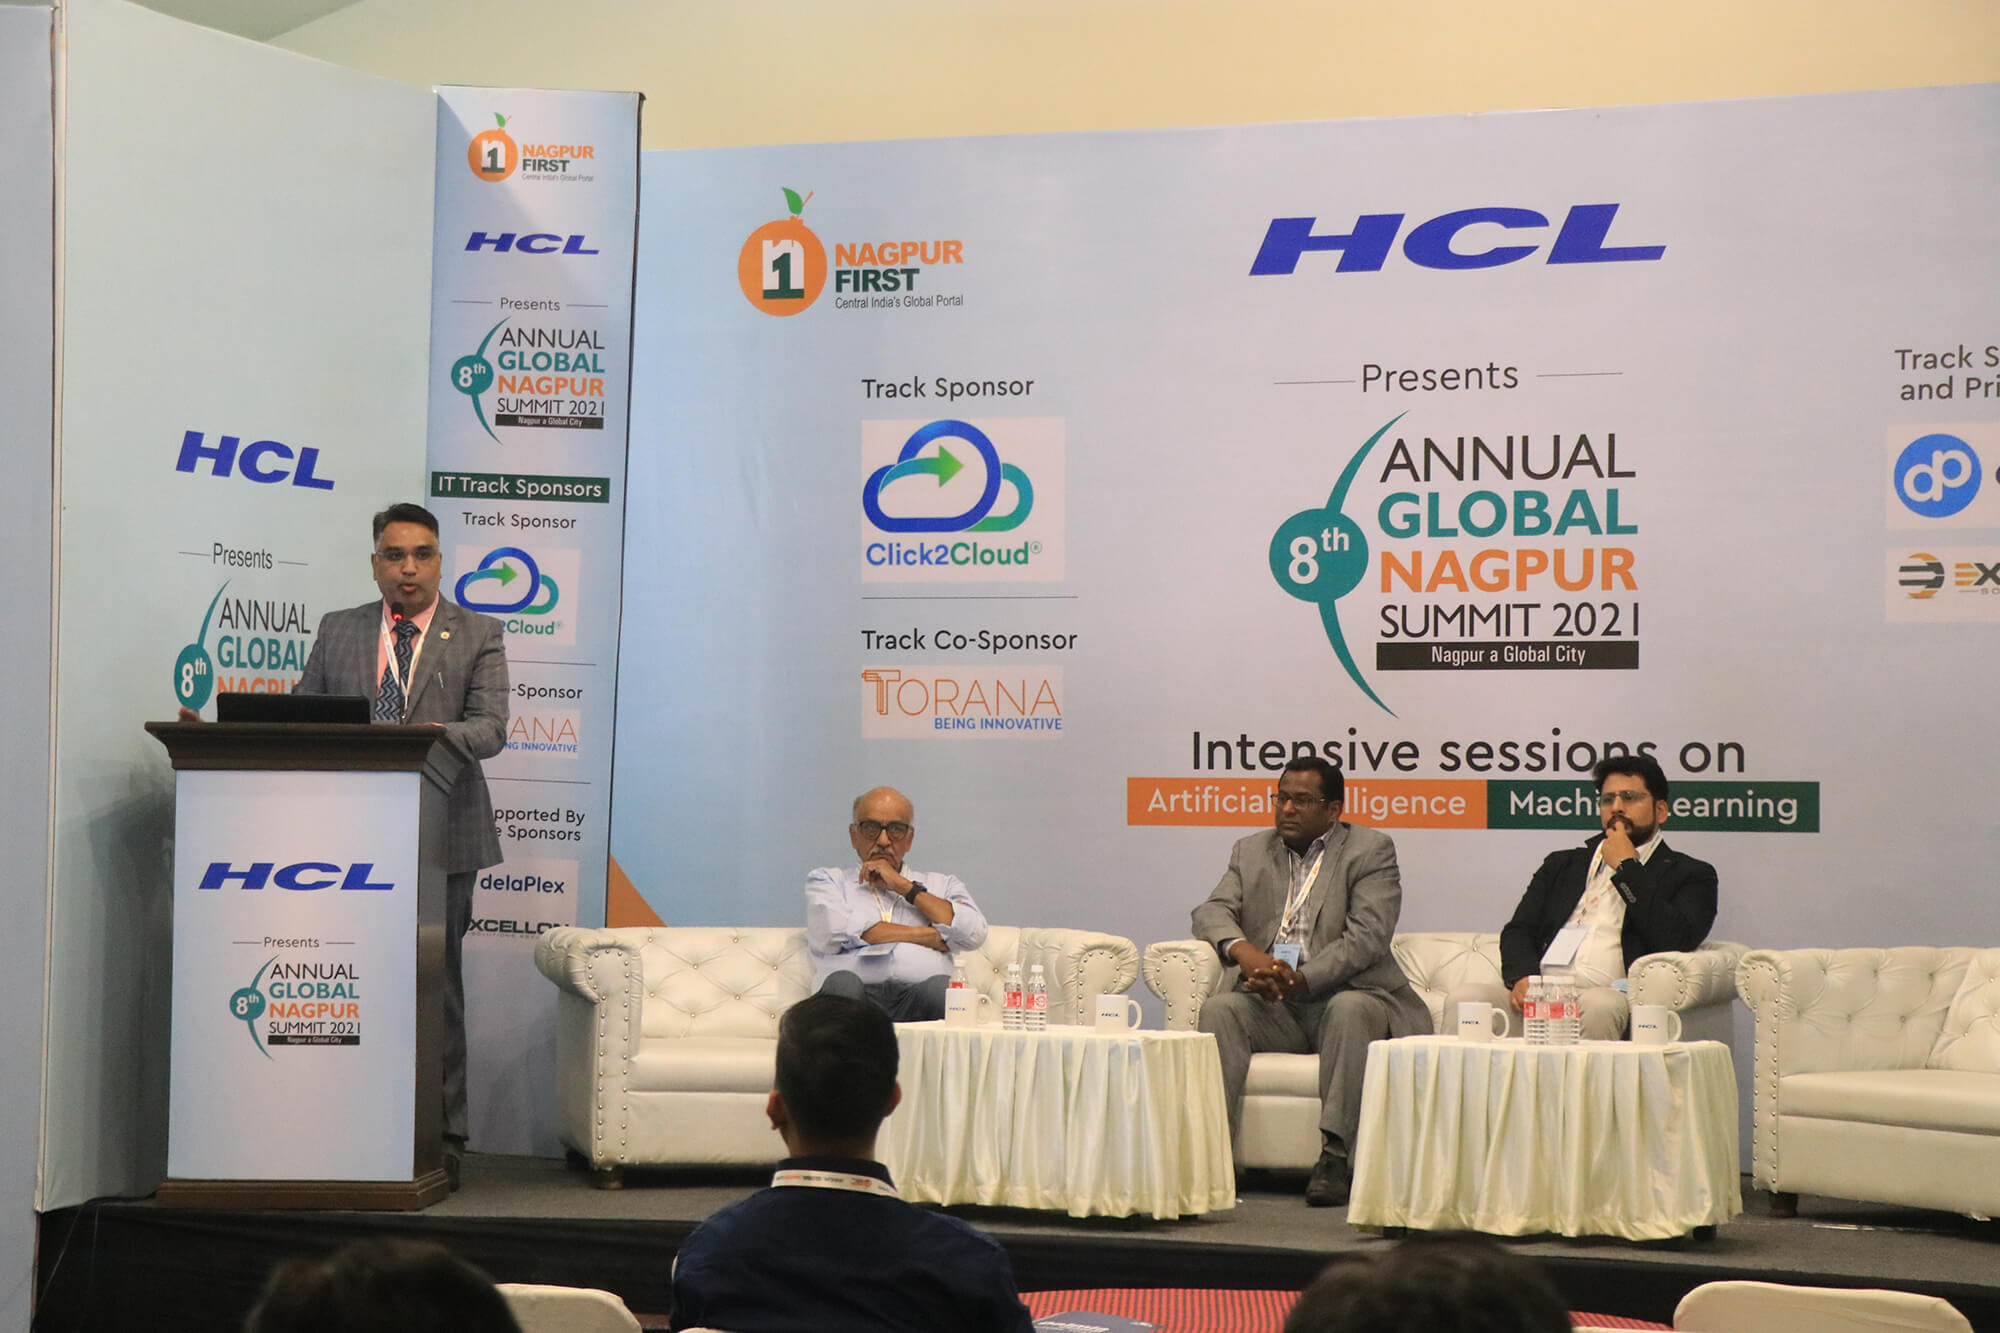 Click2Cloud-Past-Event-Global Nagpur Summit 2021-G